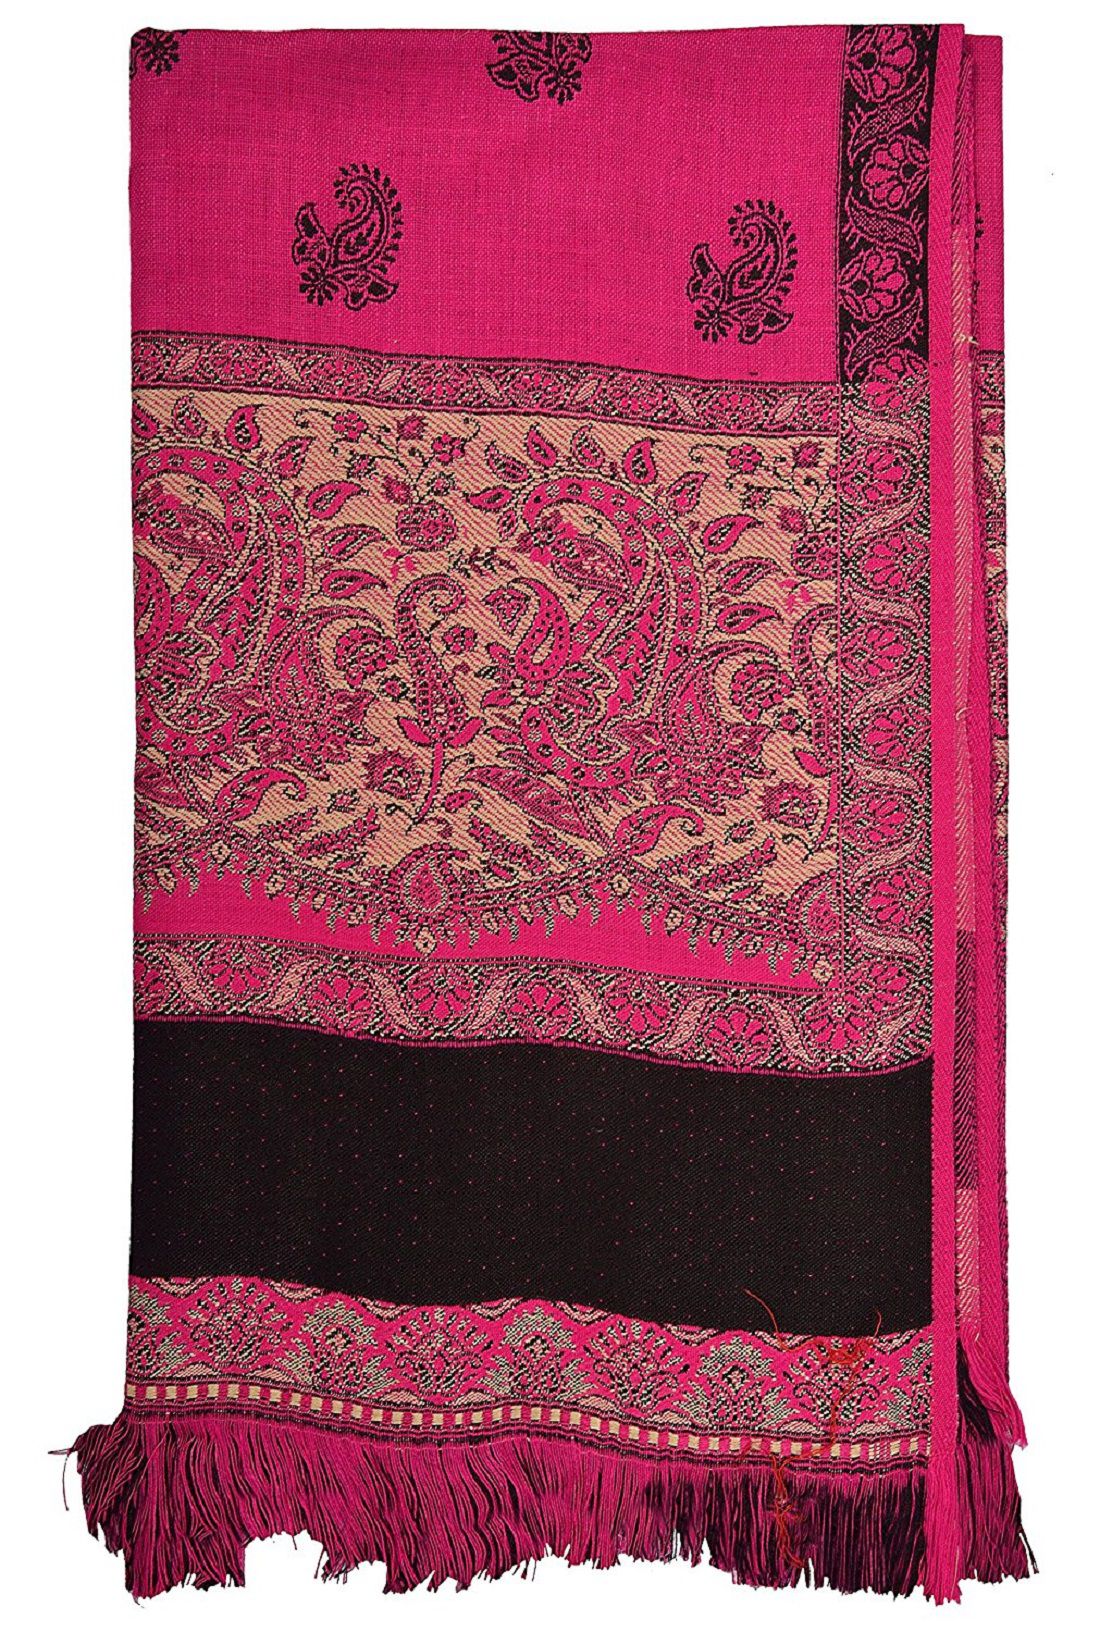 Padam shri Purple Ari Embroidery Shawl Price in India - Buy Padam shri ...